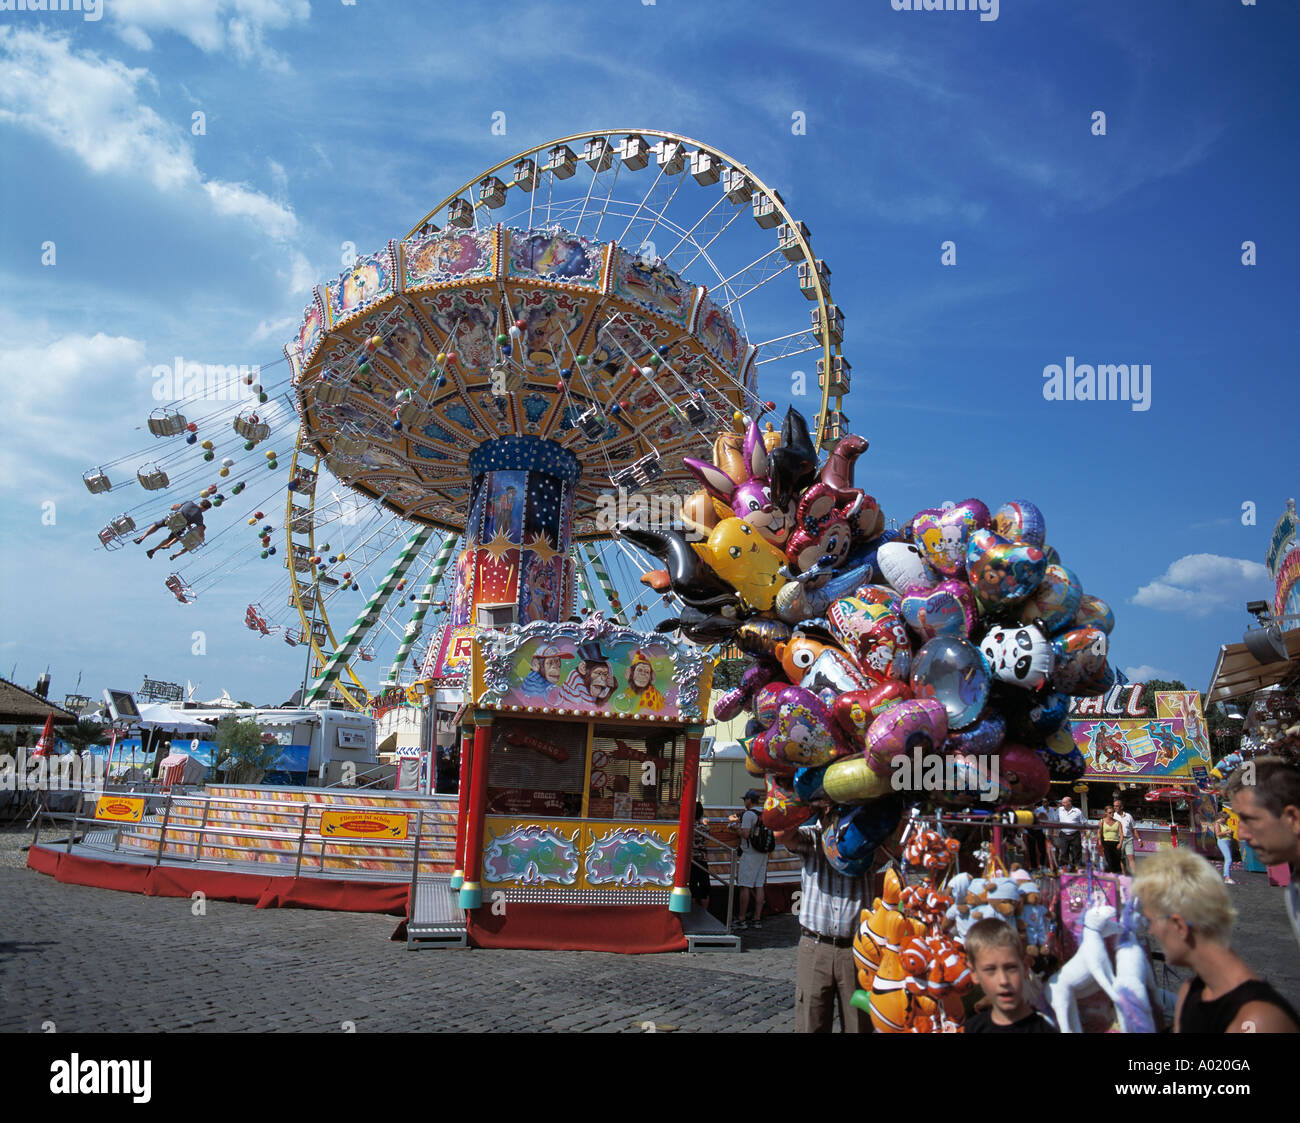 D-Herne, Ruhr area, North Rhine-Westphalia, D-Herne-Crange, Crange Fair, festival, funfair, fairground, free time, leisure time, roundabout, carousel, merry-go-round, chairoplane, Ferris wheel, balloons Stock Photo